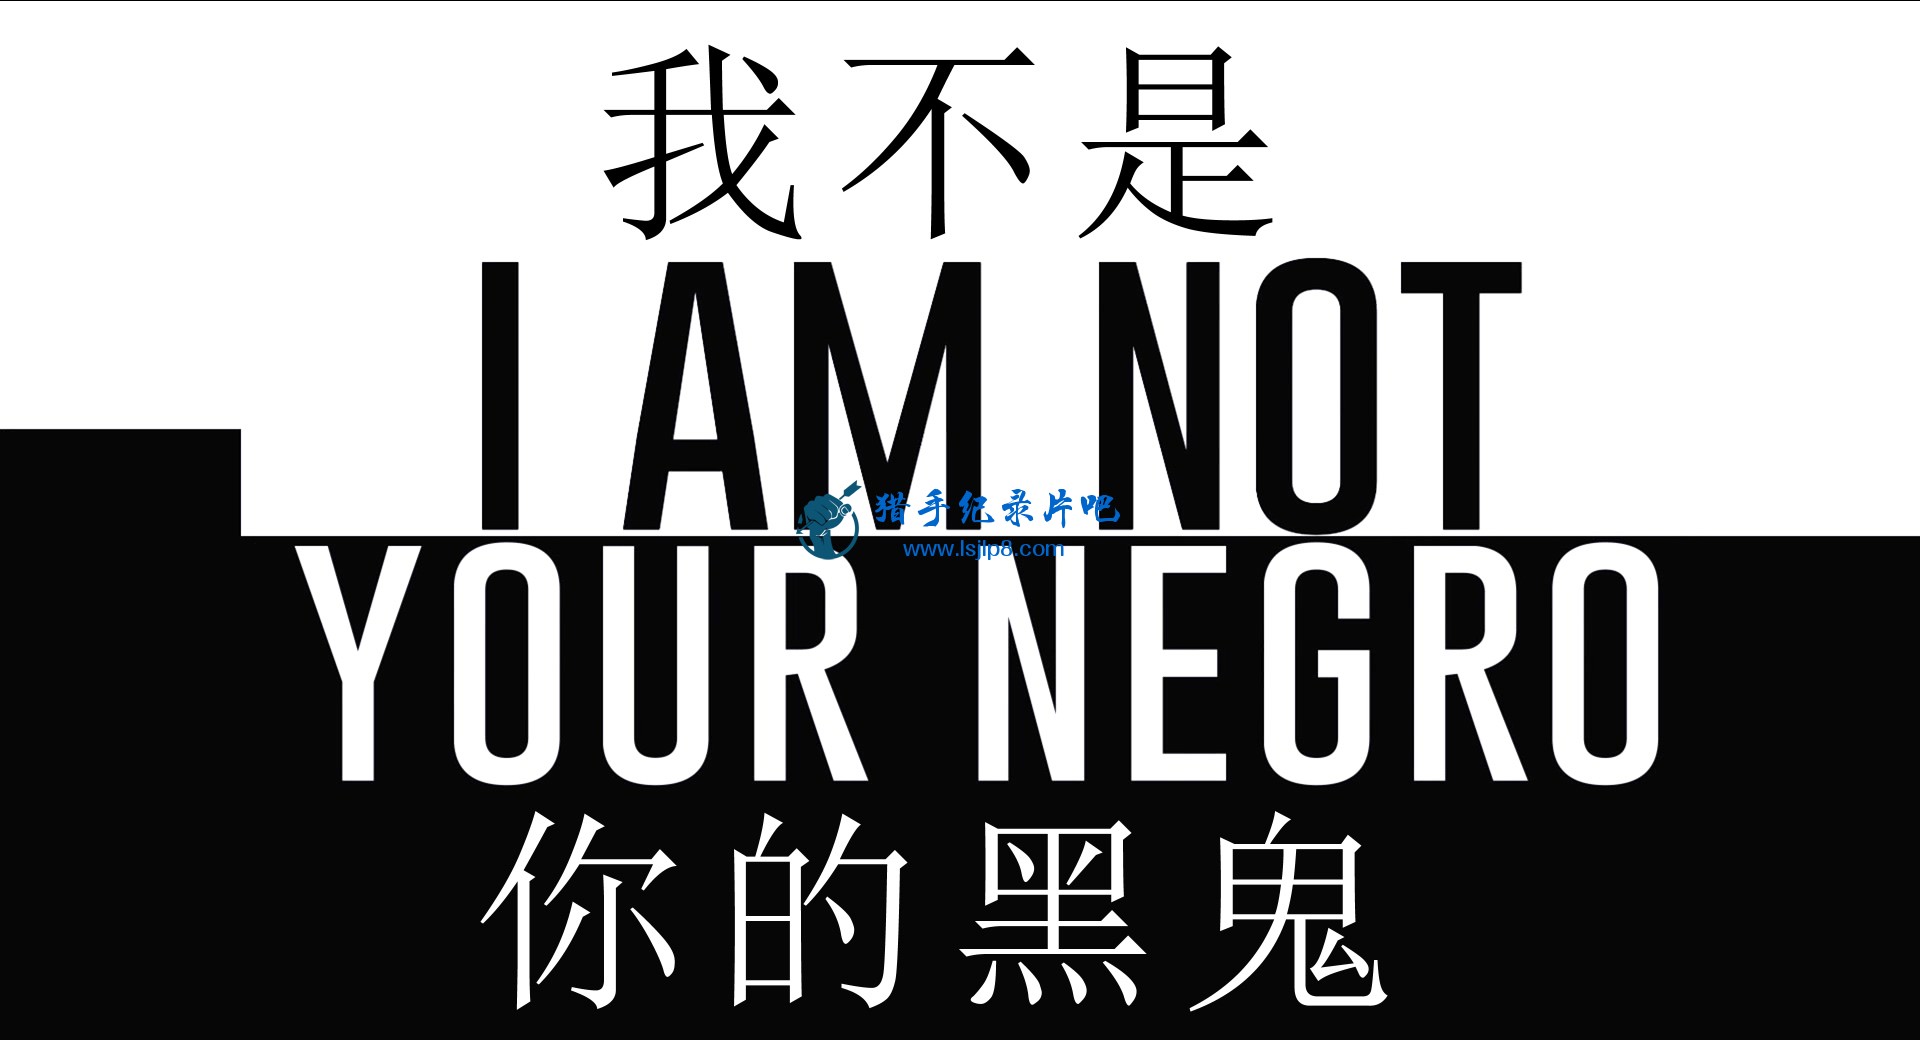 I.Am.Not.Your.Negro.2016.DOCU.1080p.BluRay.x264-PSYCHD.mkv_20200806_105929.013.jpg